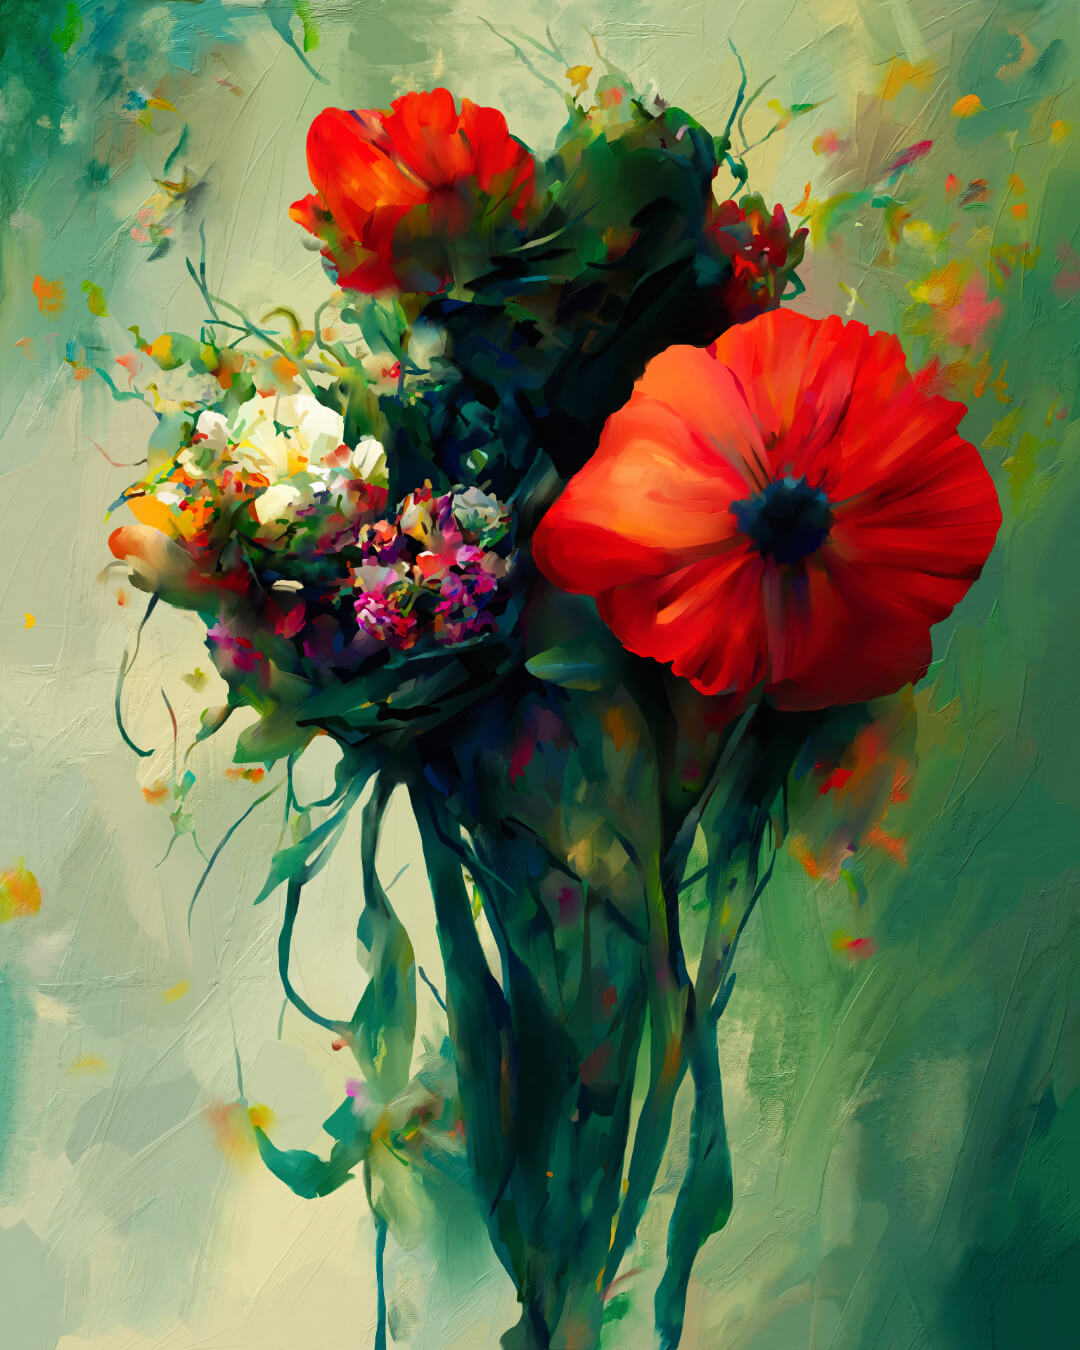 Digital oil painting of poppies.